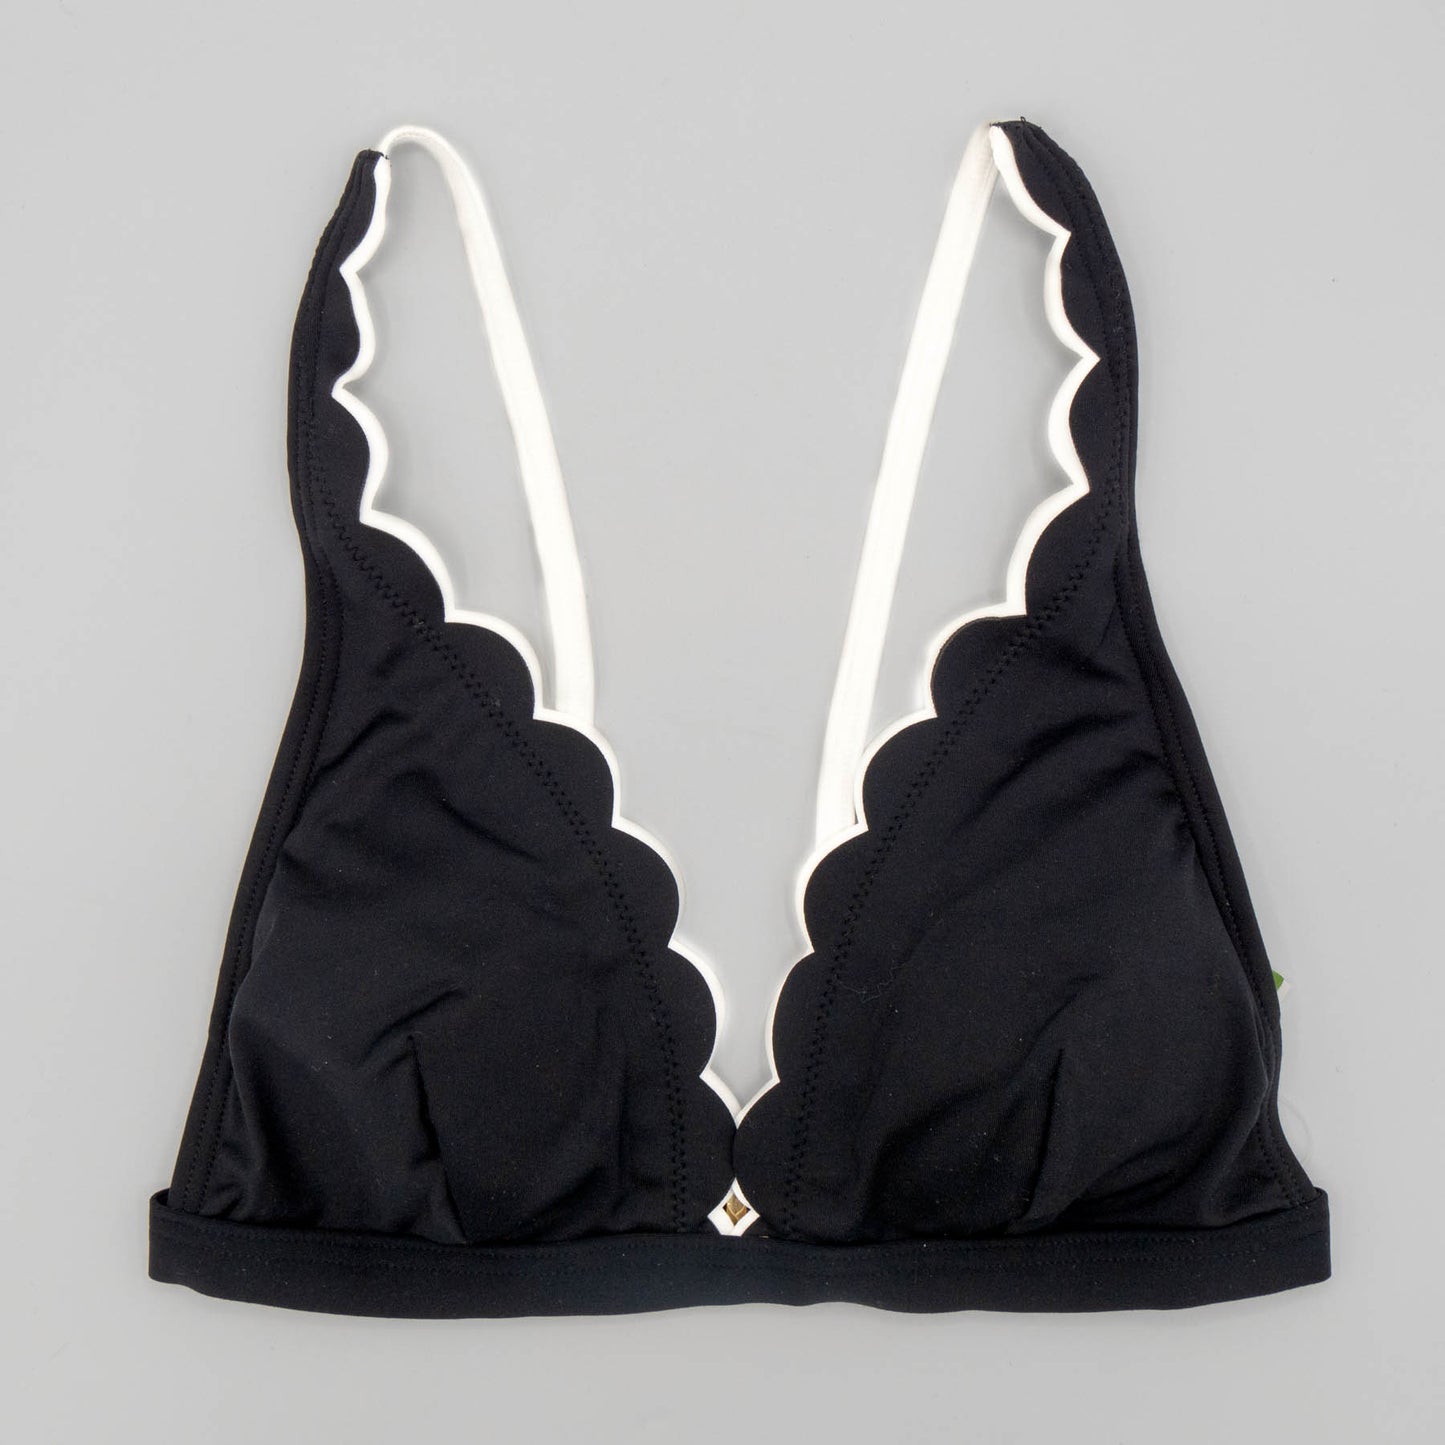 Kate Spade New York -  Cruse Swimwear Tops - Black